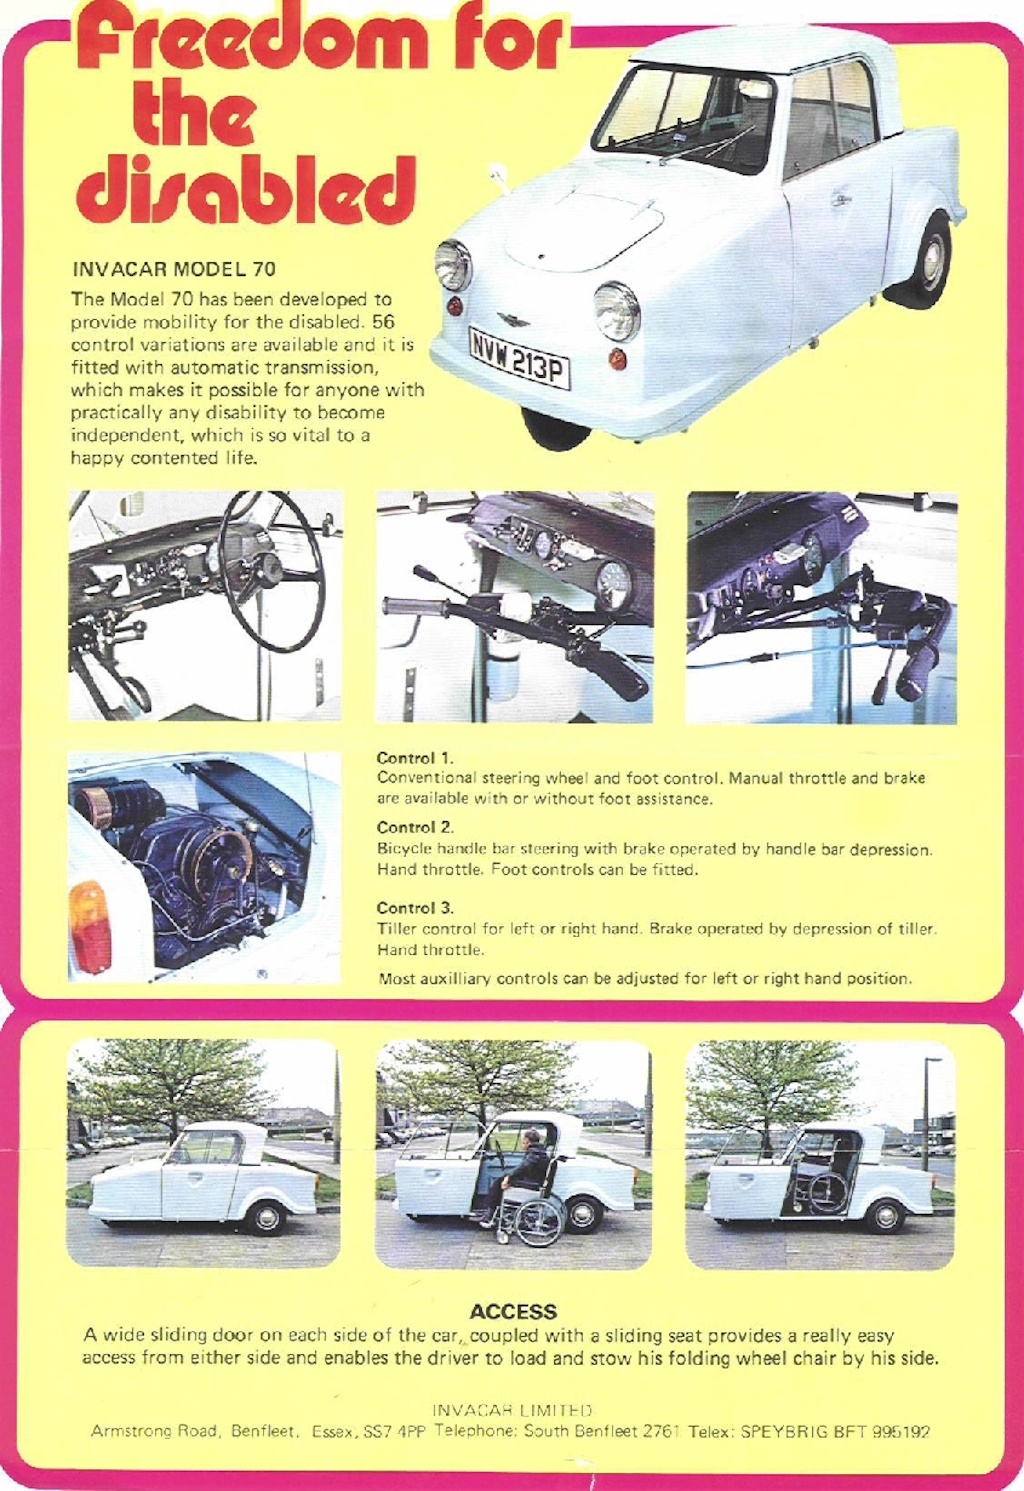 Incavar Model 70 Informational Brochure/Flier Page 1